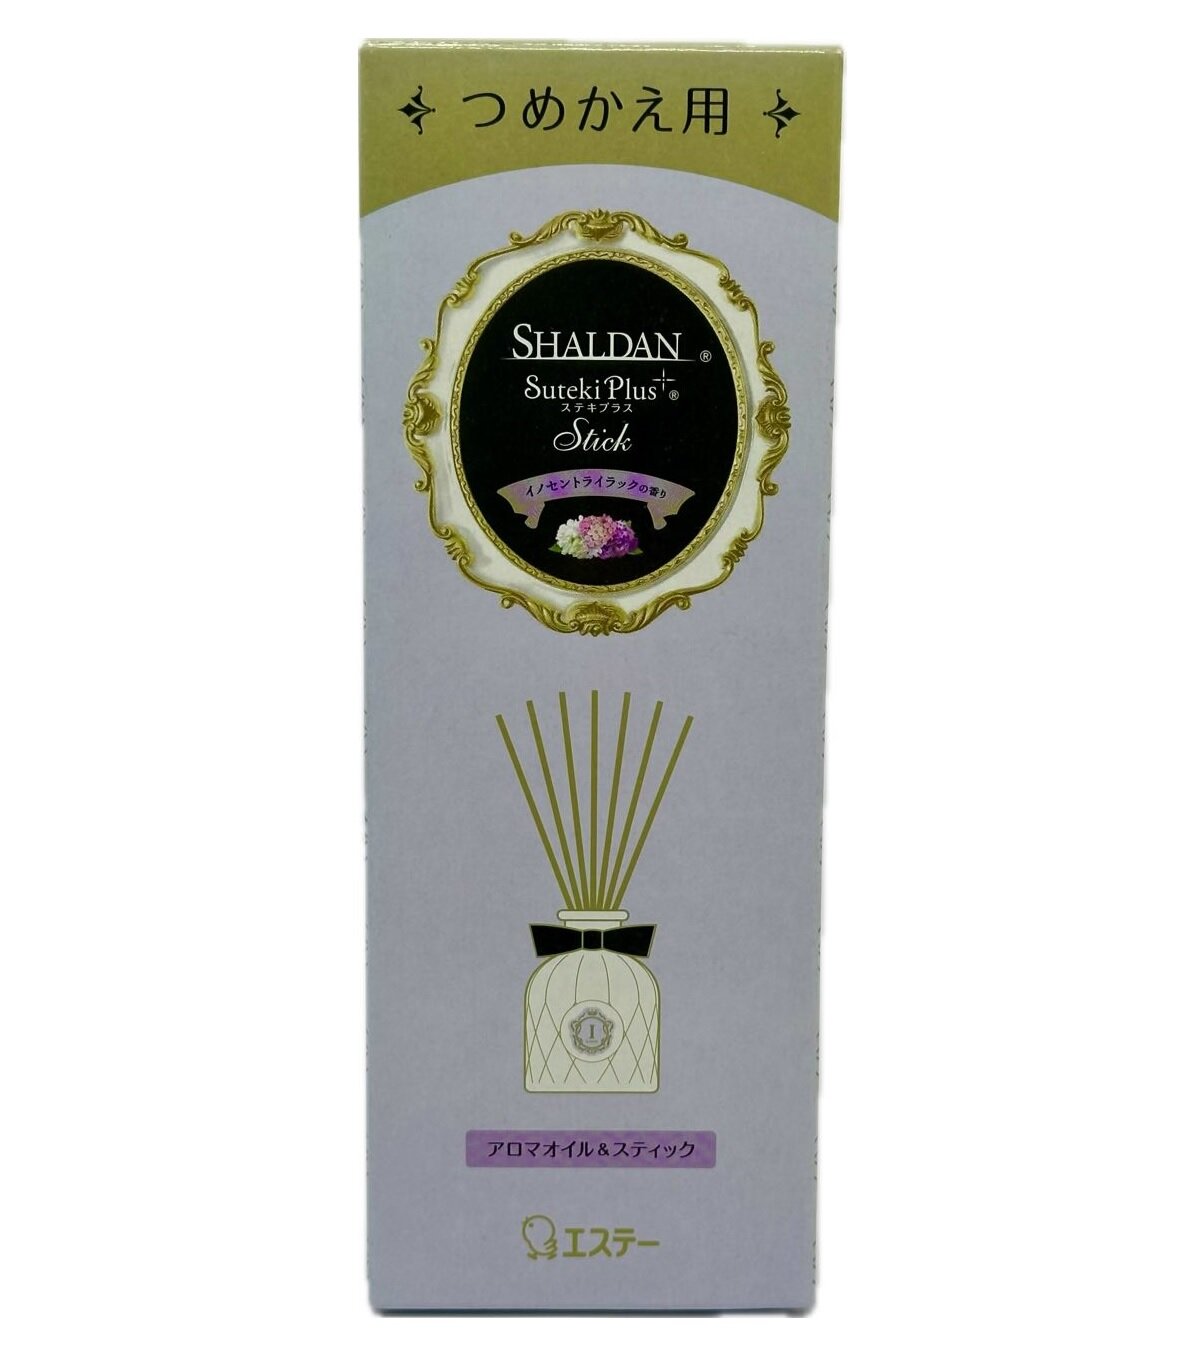 ST Арома Диффузор Shaldan SUTEKI PLUS наполнитель + палочки бамбук, невинный аромат сирени, 45 мл.